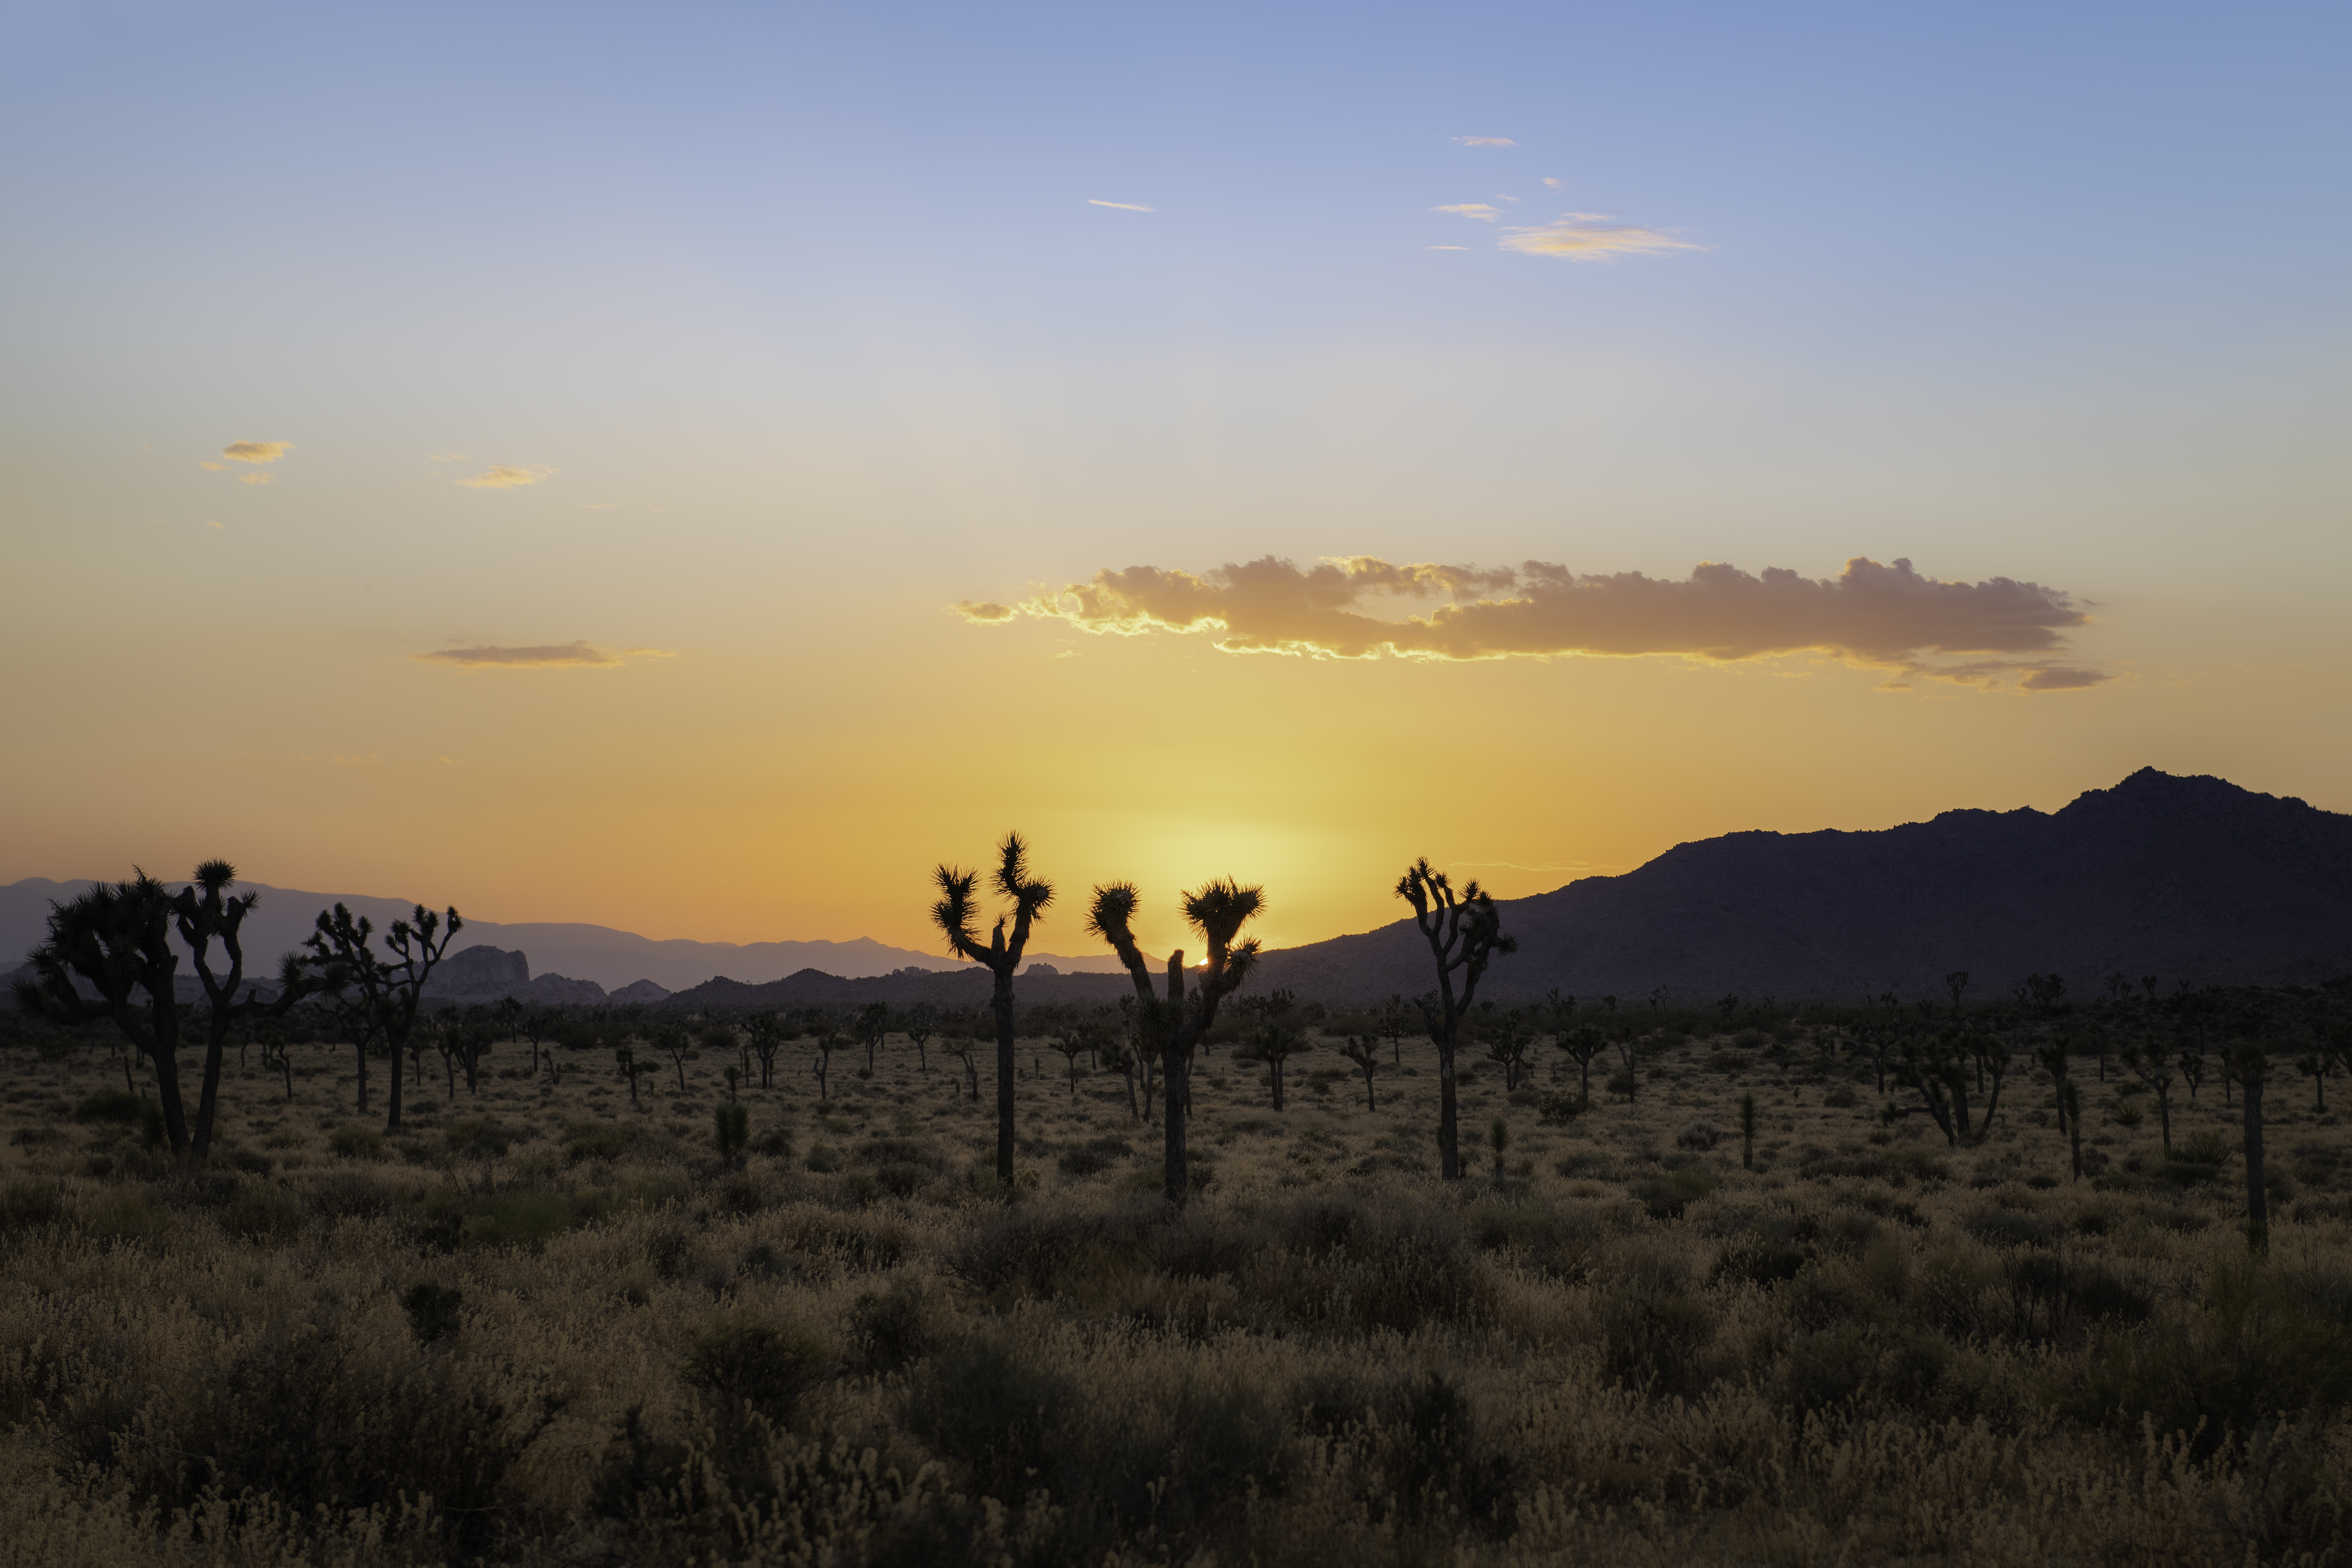 mountains, nature, cactuses, sunset, desert